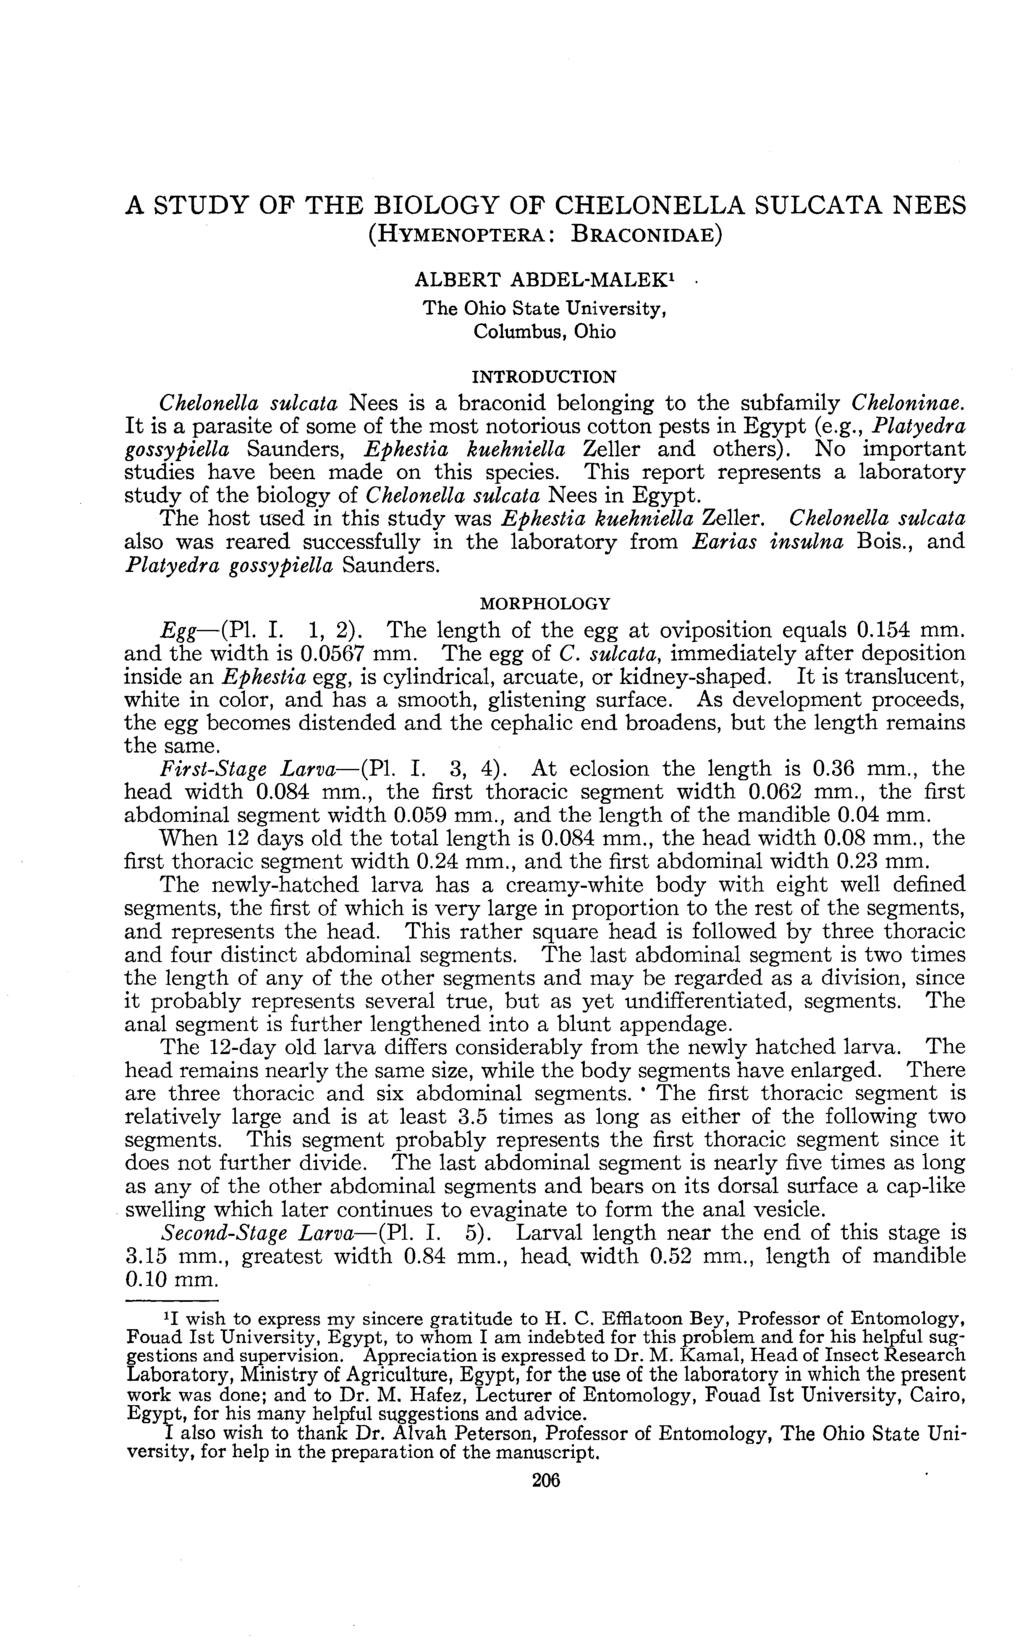 A STUDY OF THE BIOLOGY OF CHELONELLA SULCATA NEES (HYMENOPTERA : BRACONIDAE) ALBERT ABDEL-MALEK 1 The Ohio State University, Columbus, Ohio INTRODUCTION Chelonella sulcata Nees is a braconid